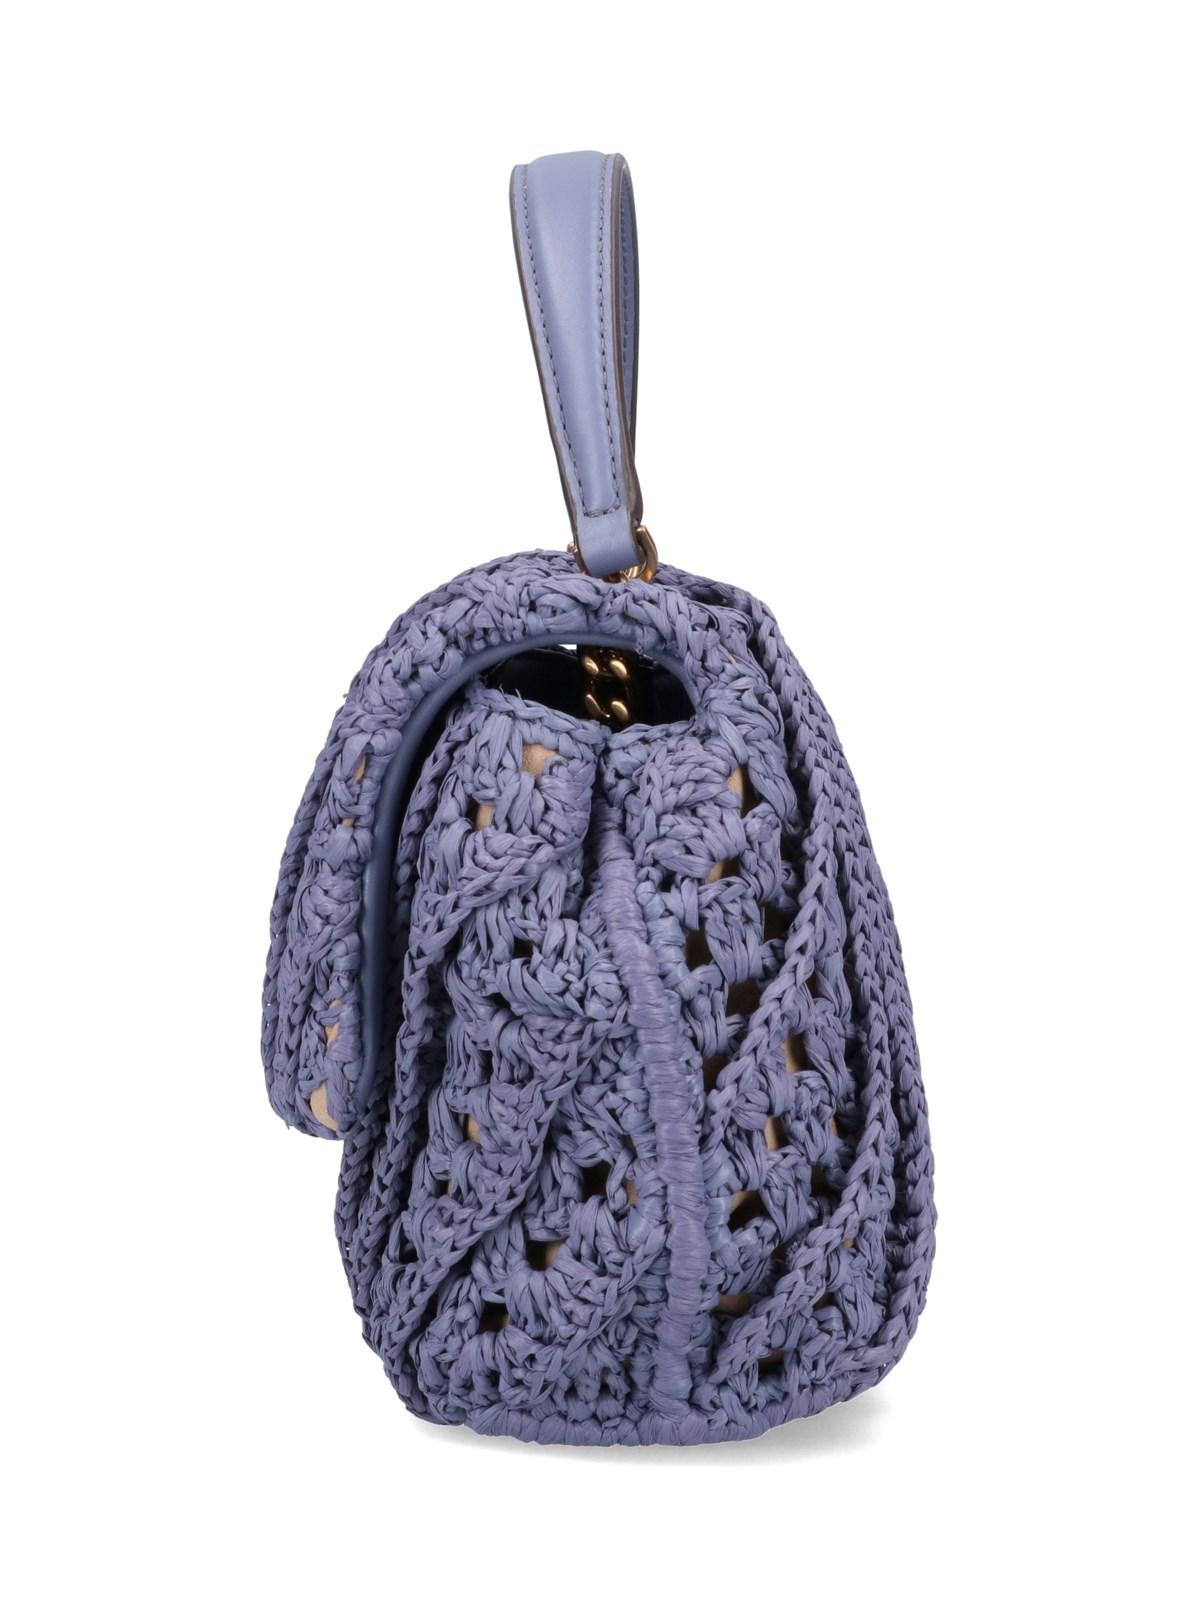 tory burch crochet bag